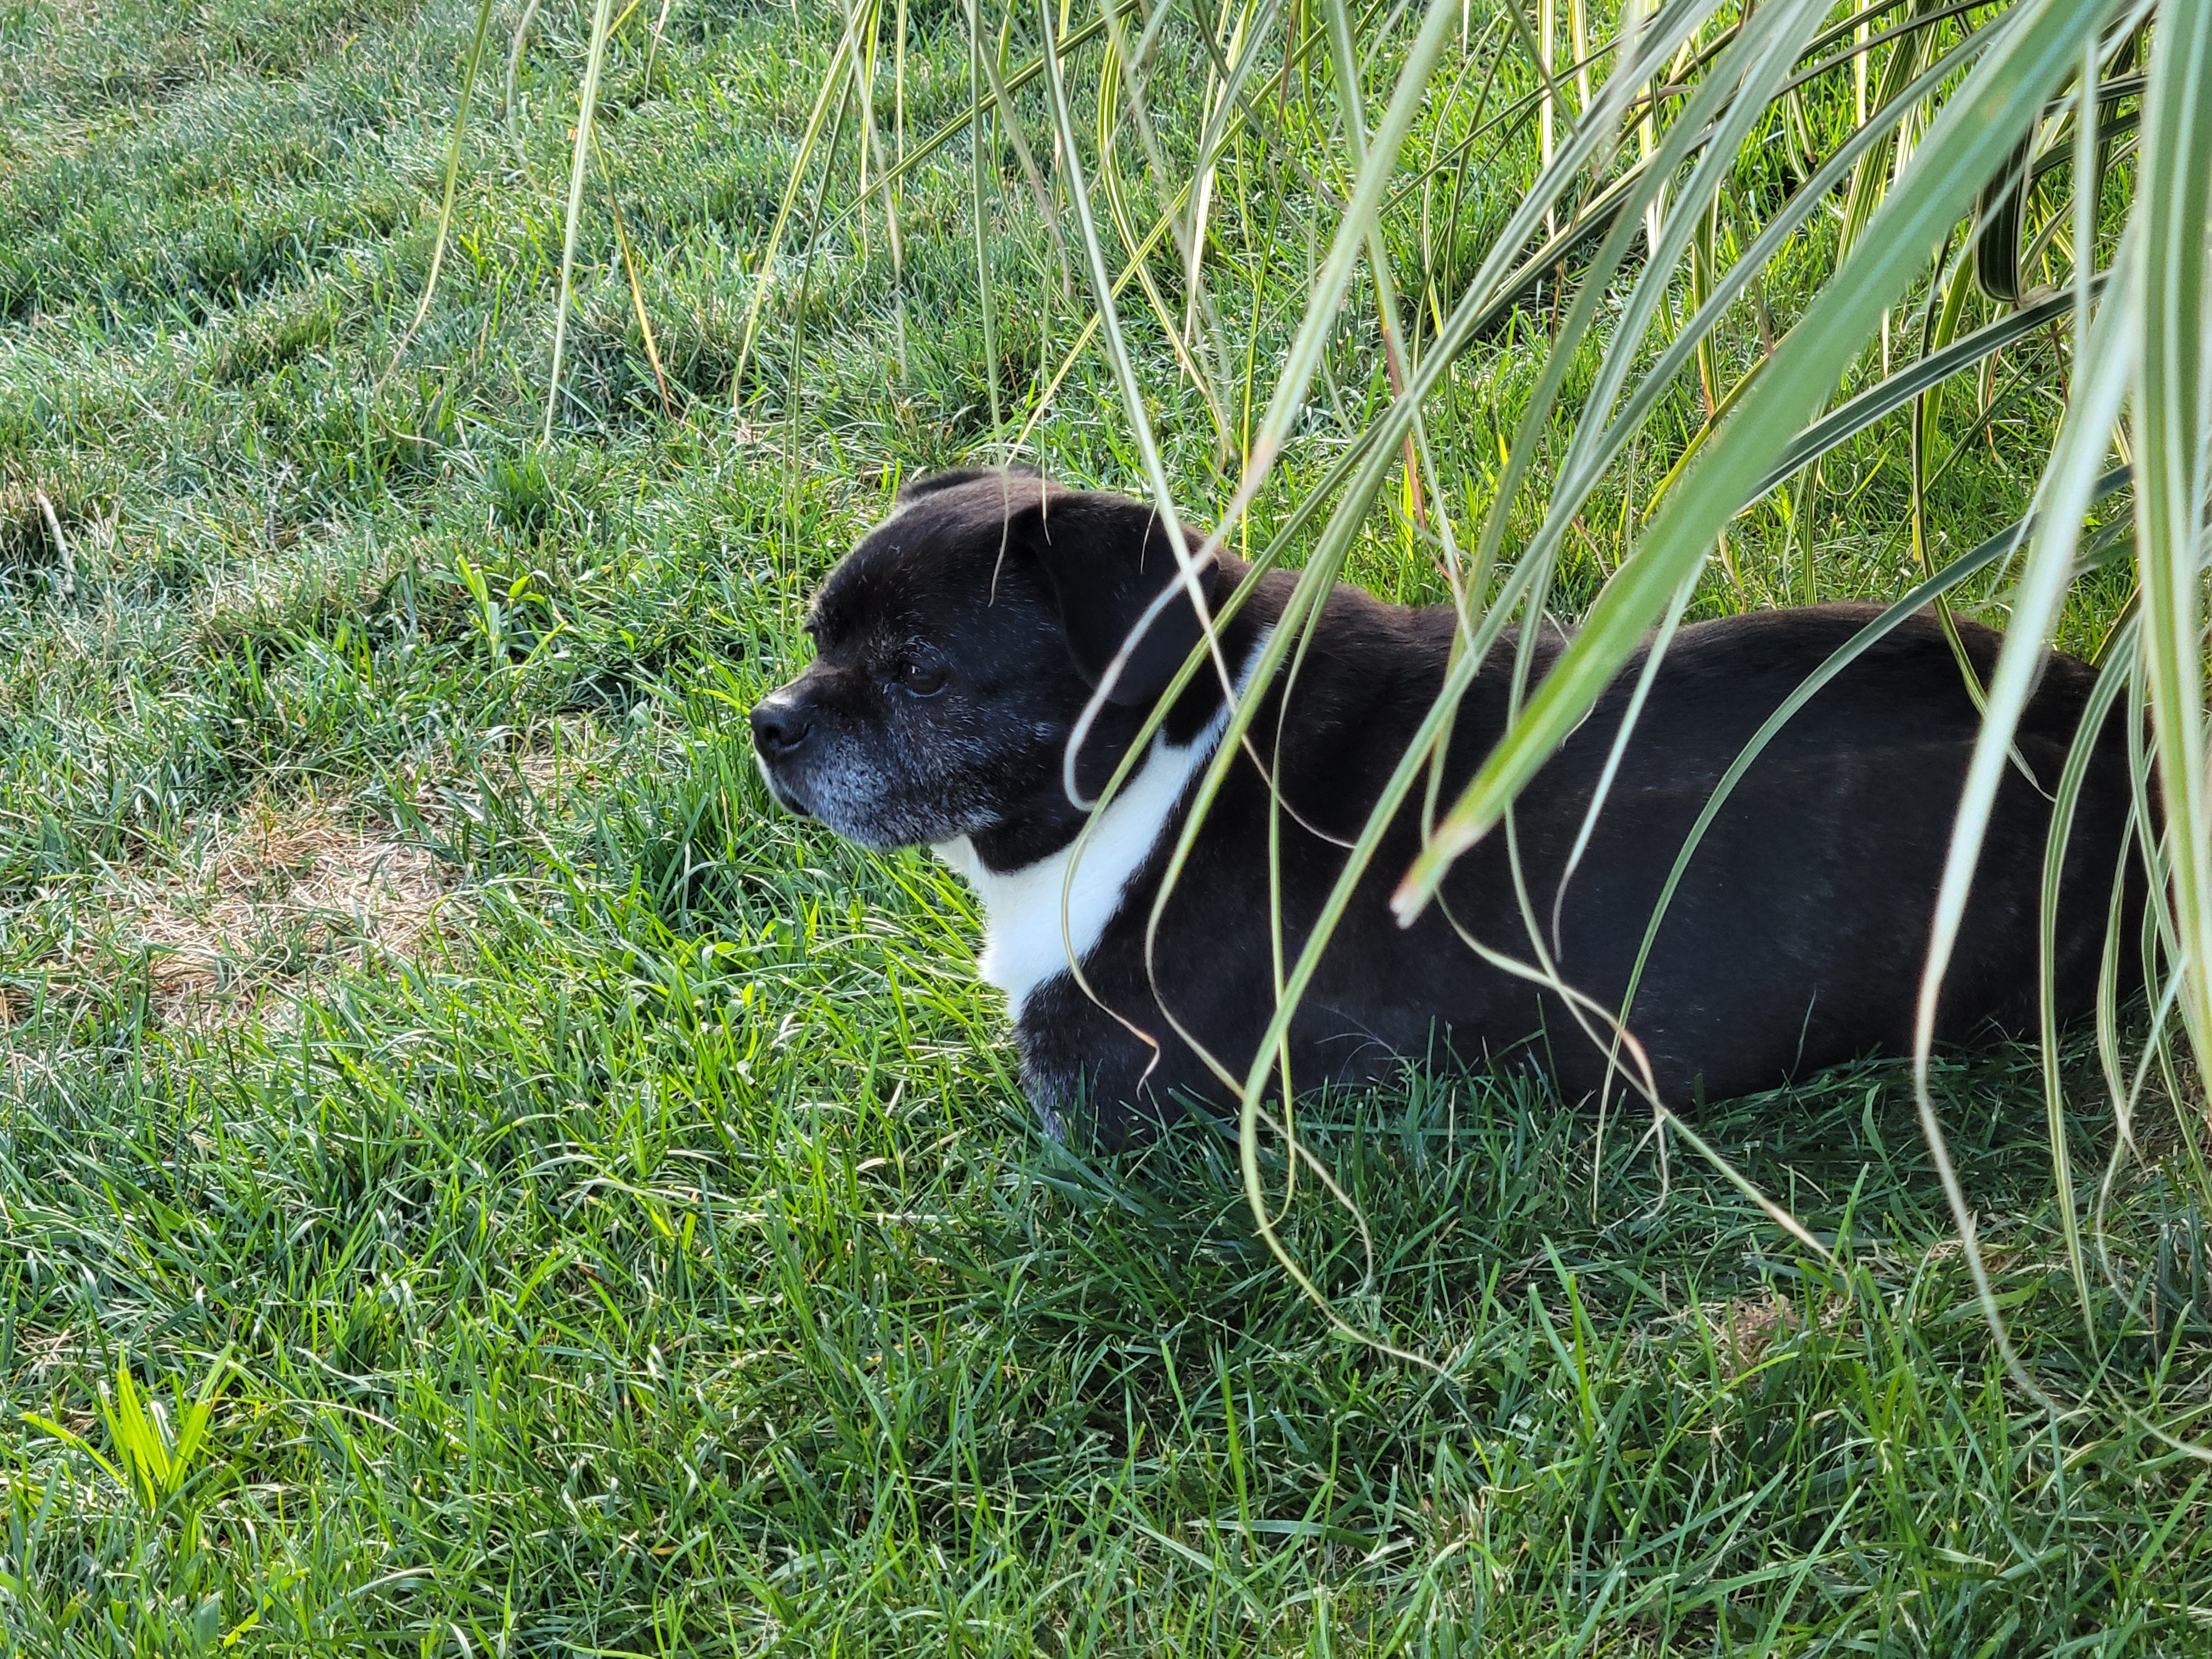 A small black mixed breed dog